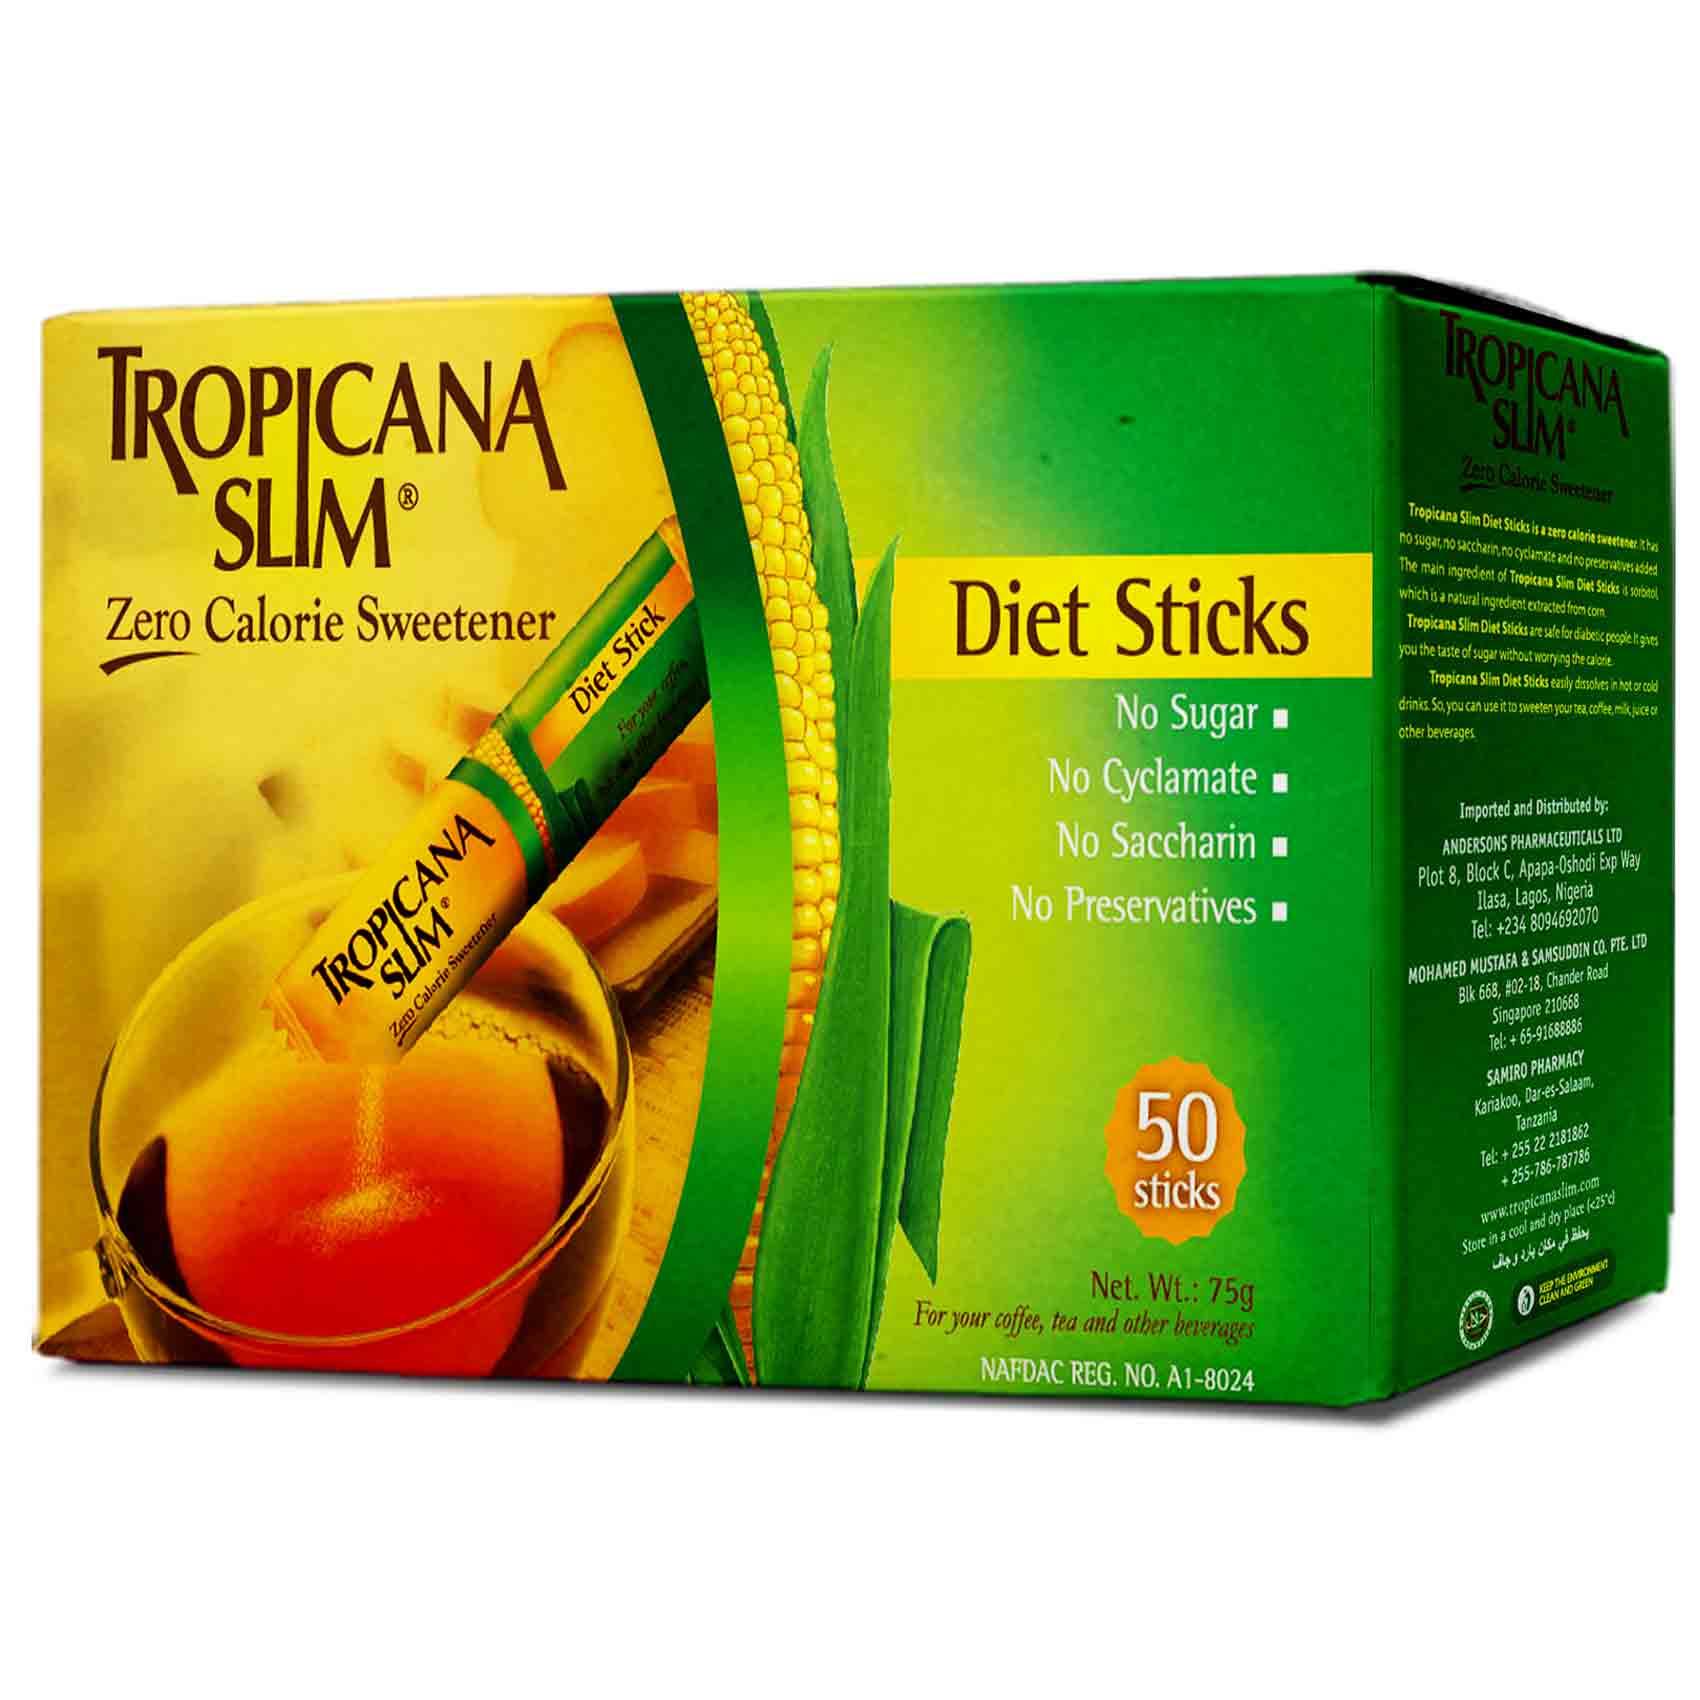 Tropicana Slim Sugar Free Sweetener 50 Sticks